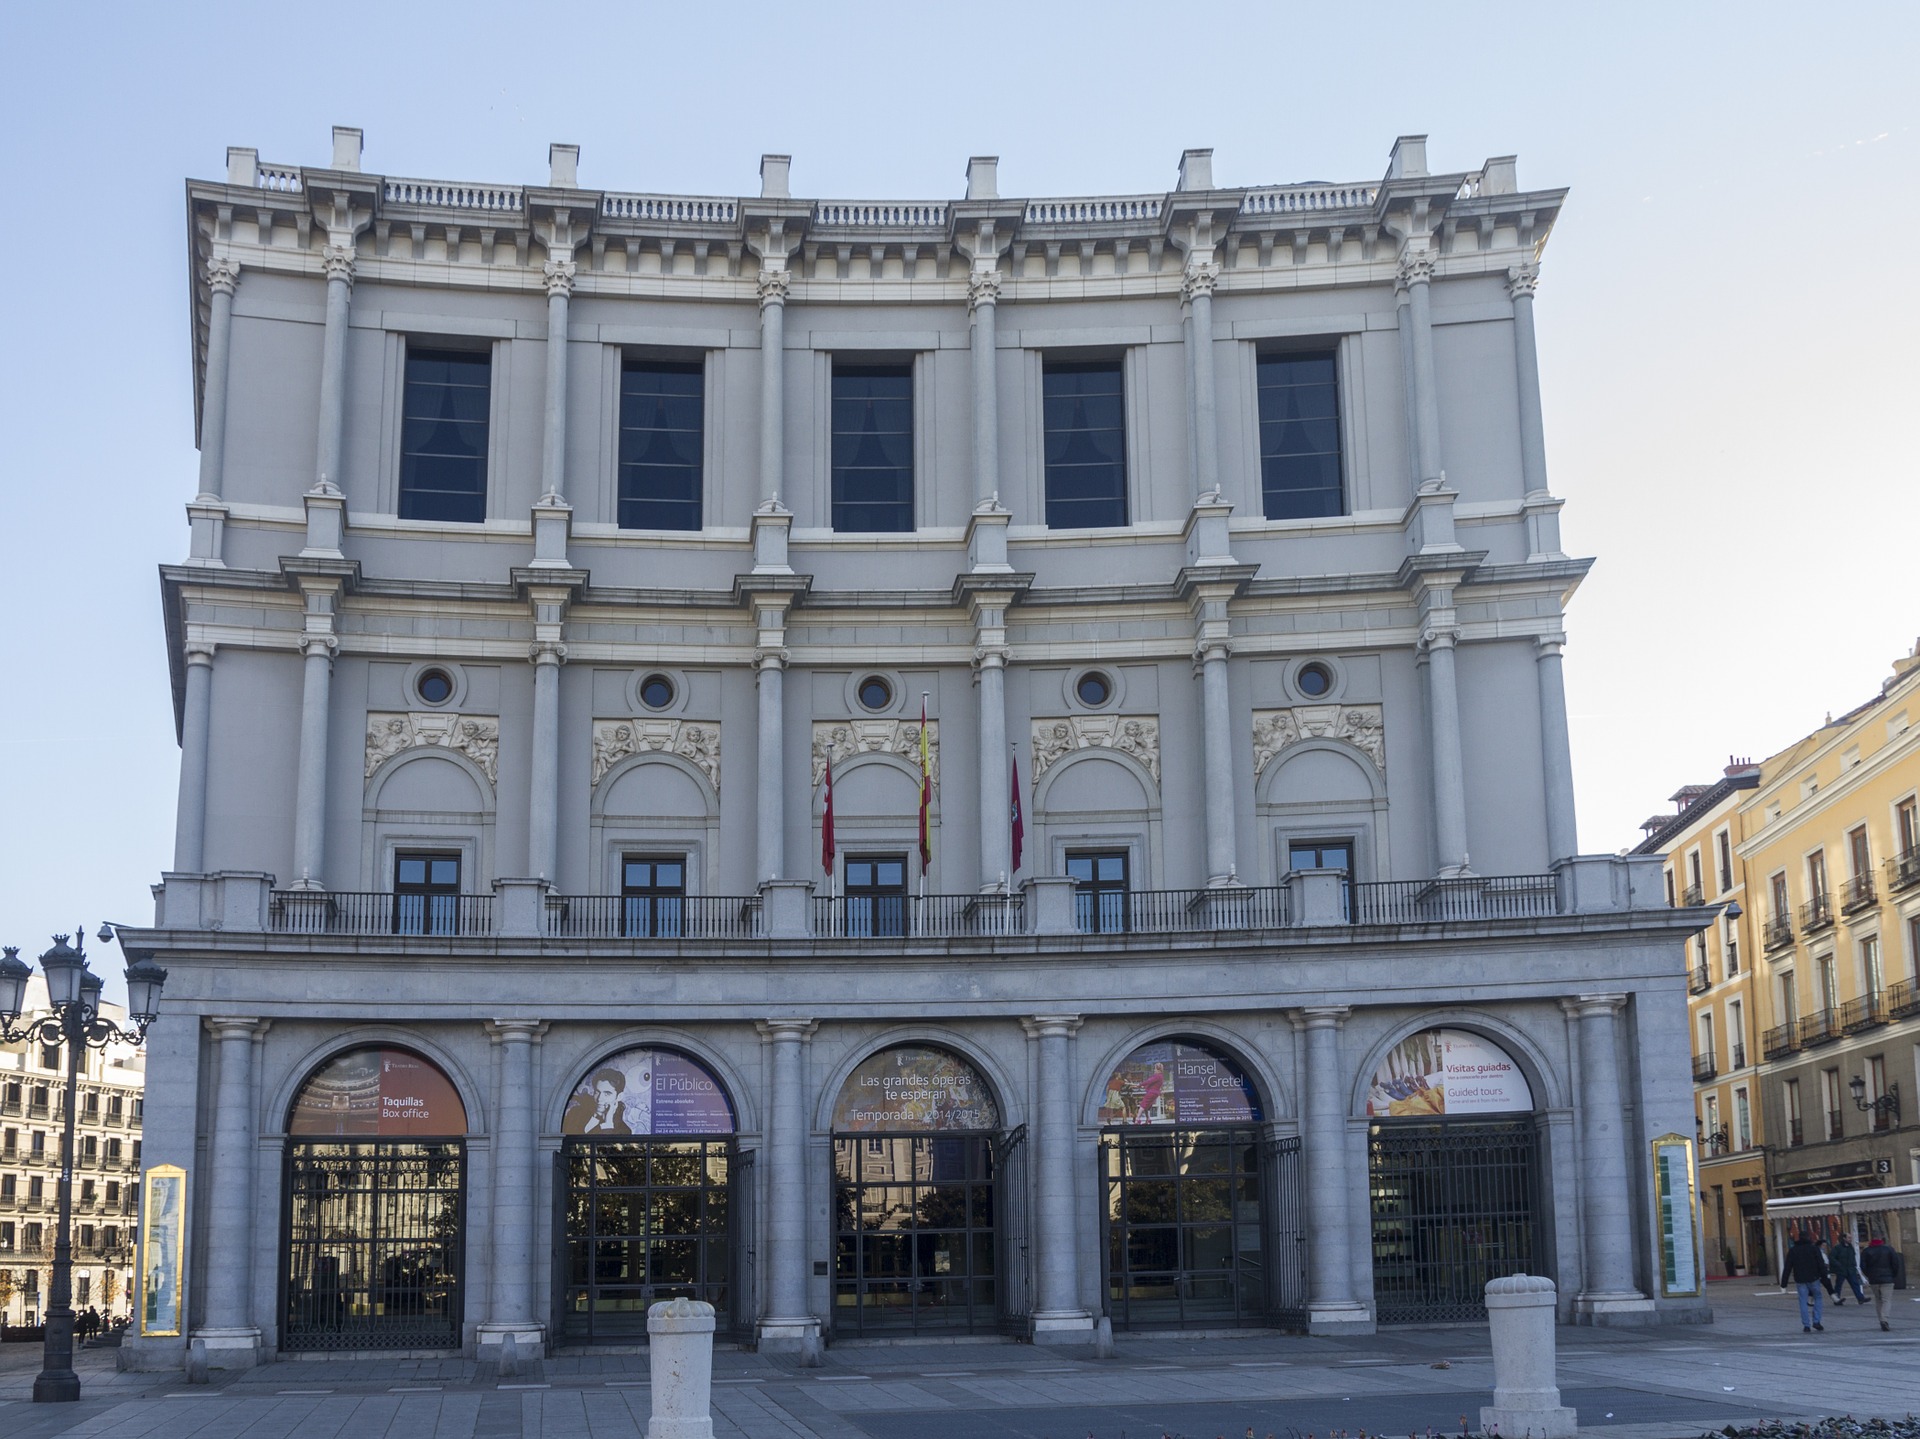 Teatro Real (Royal Theatre), Madrid, Spain